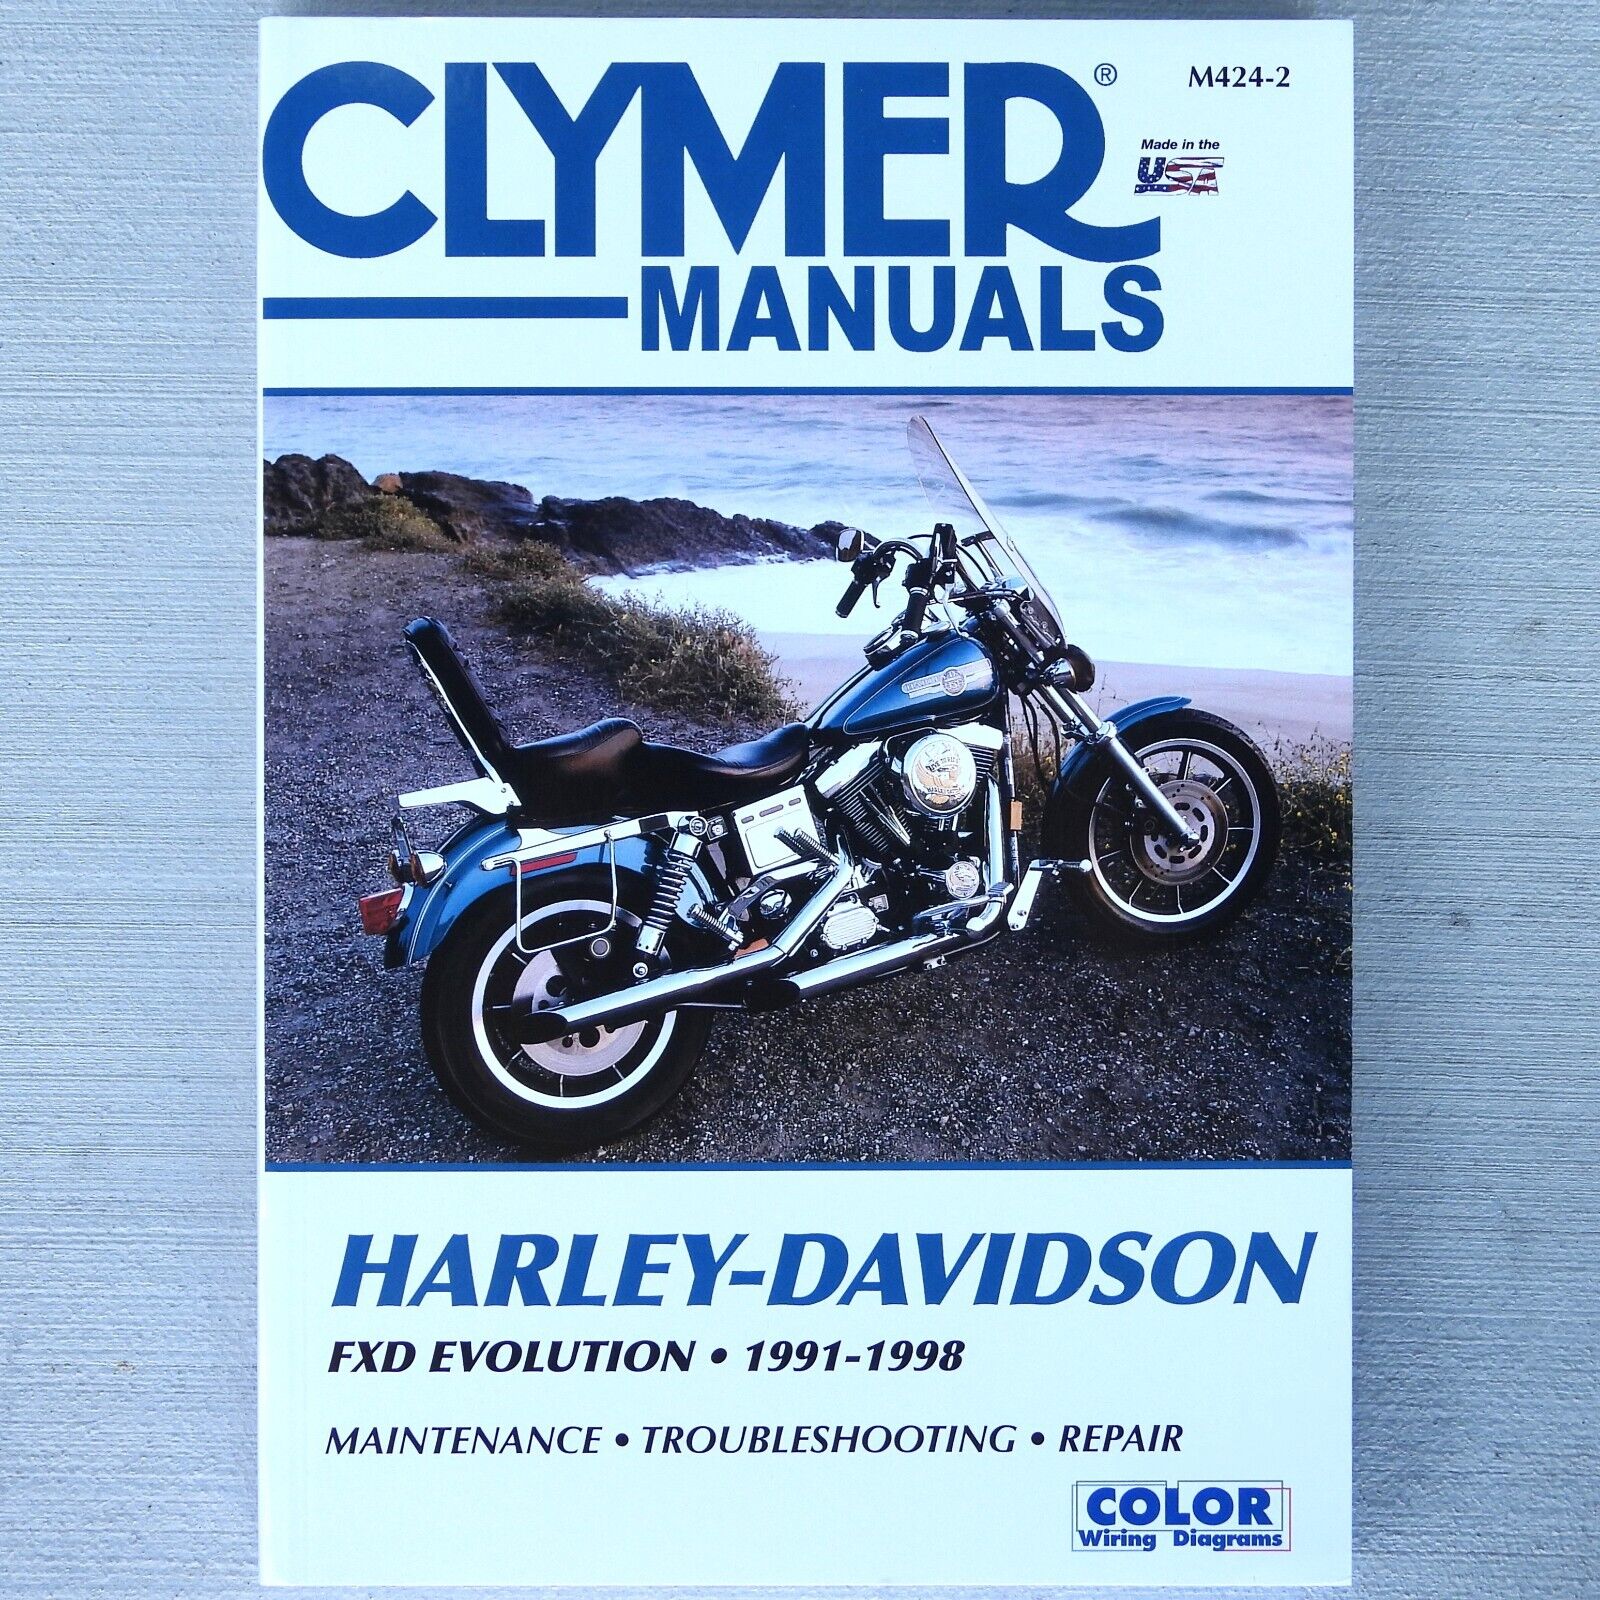 1991-1998 Harley Dyna Super Wide Glide Evolution FXD FXDS CLYMER REPAIR MANUAL